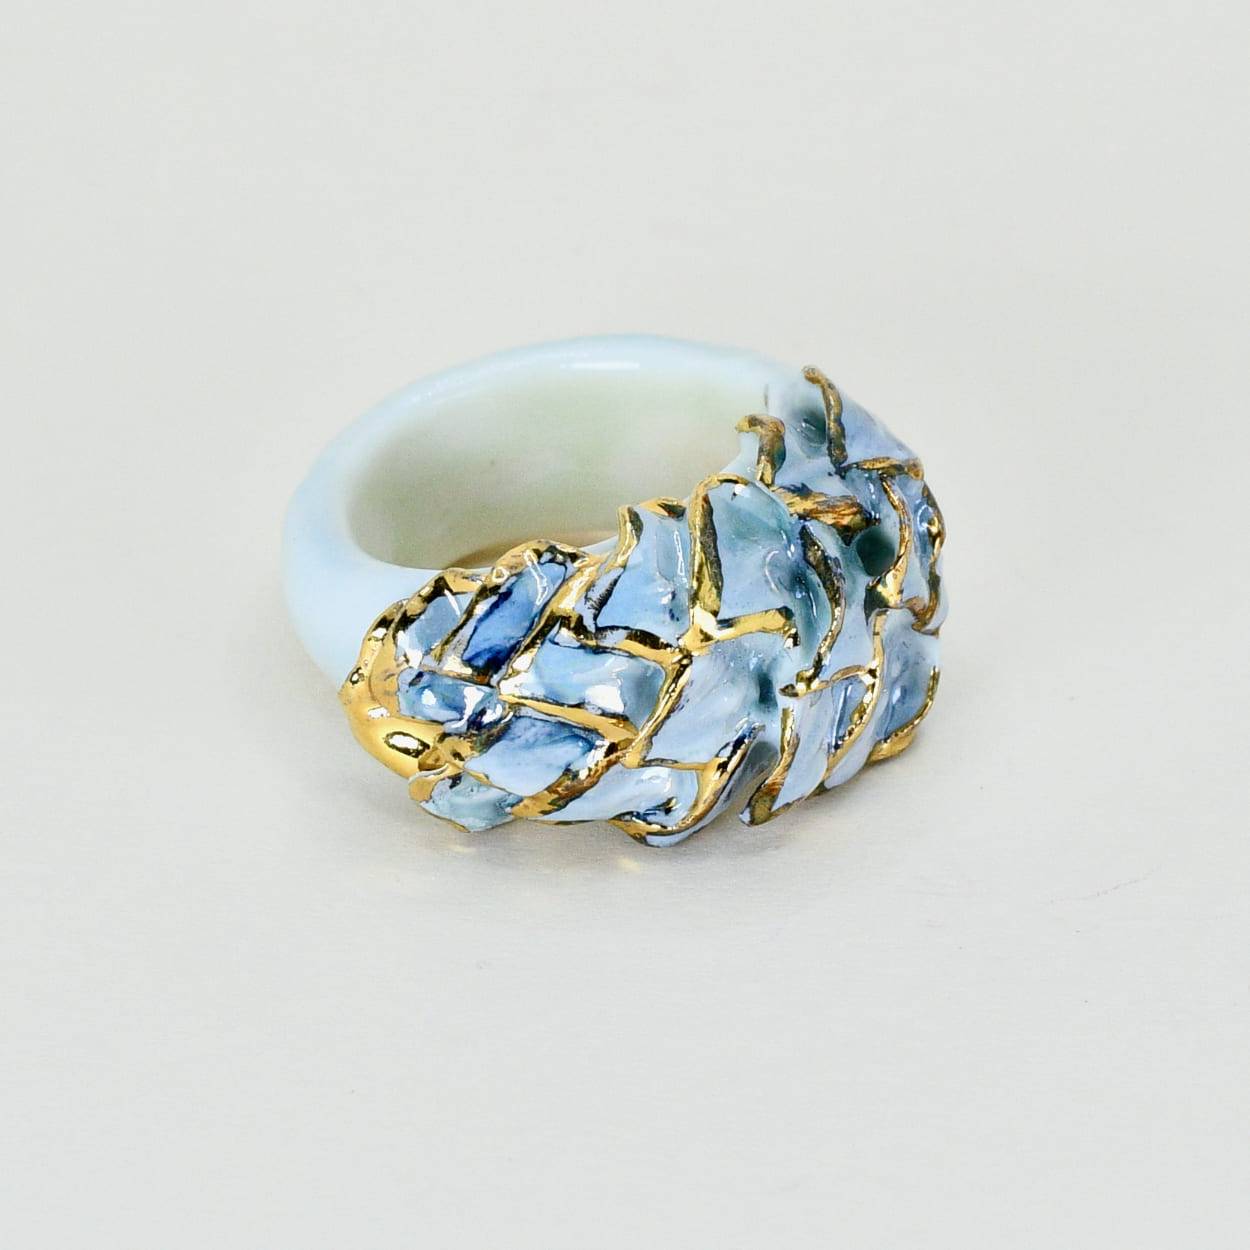 ACARA Porcelain Ceramic Ring